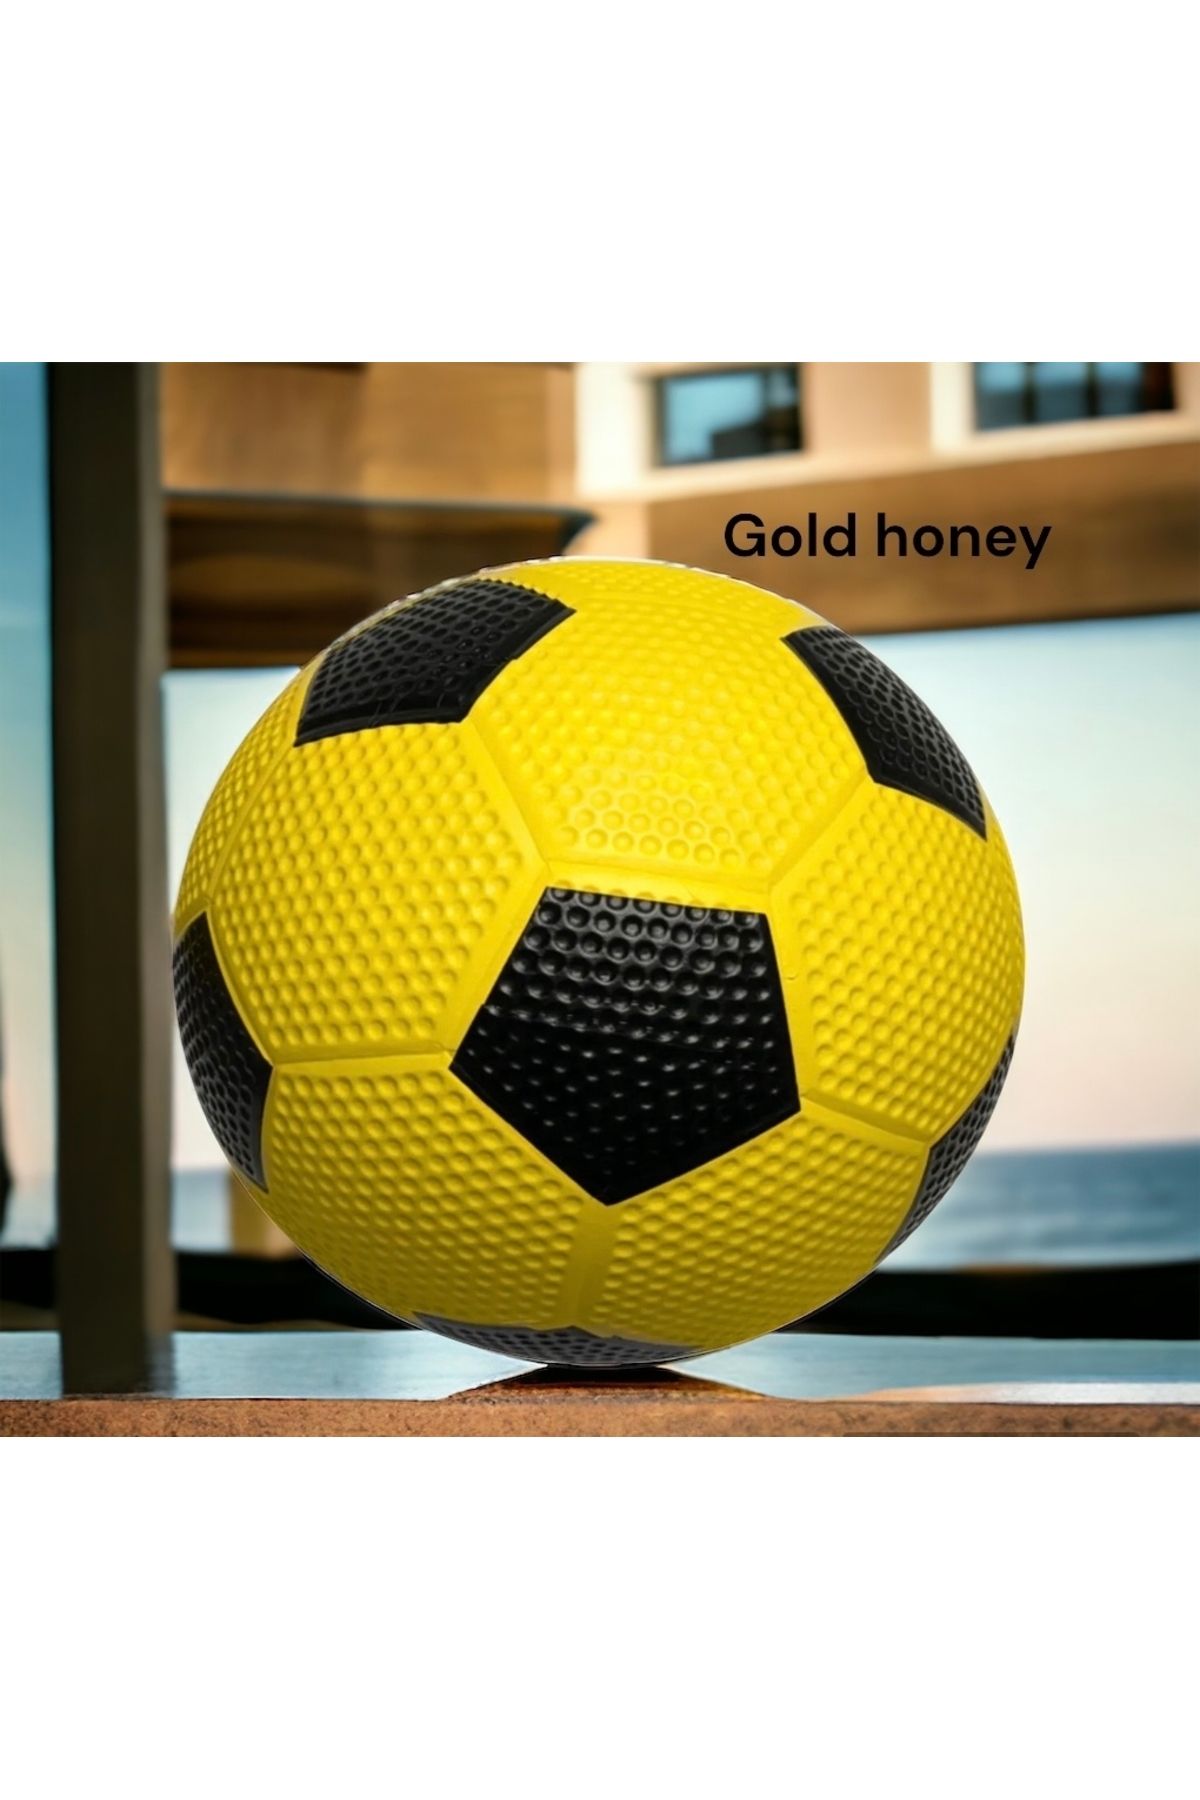 gold honey Kauçuk Futbol Topu Süper Sağlam karışık renkli